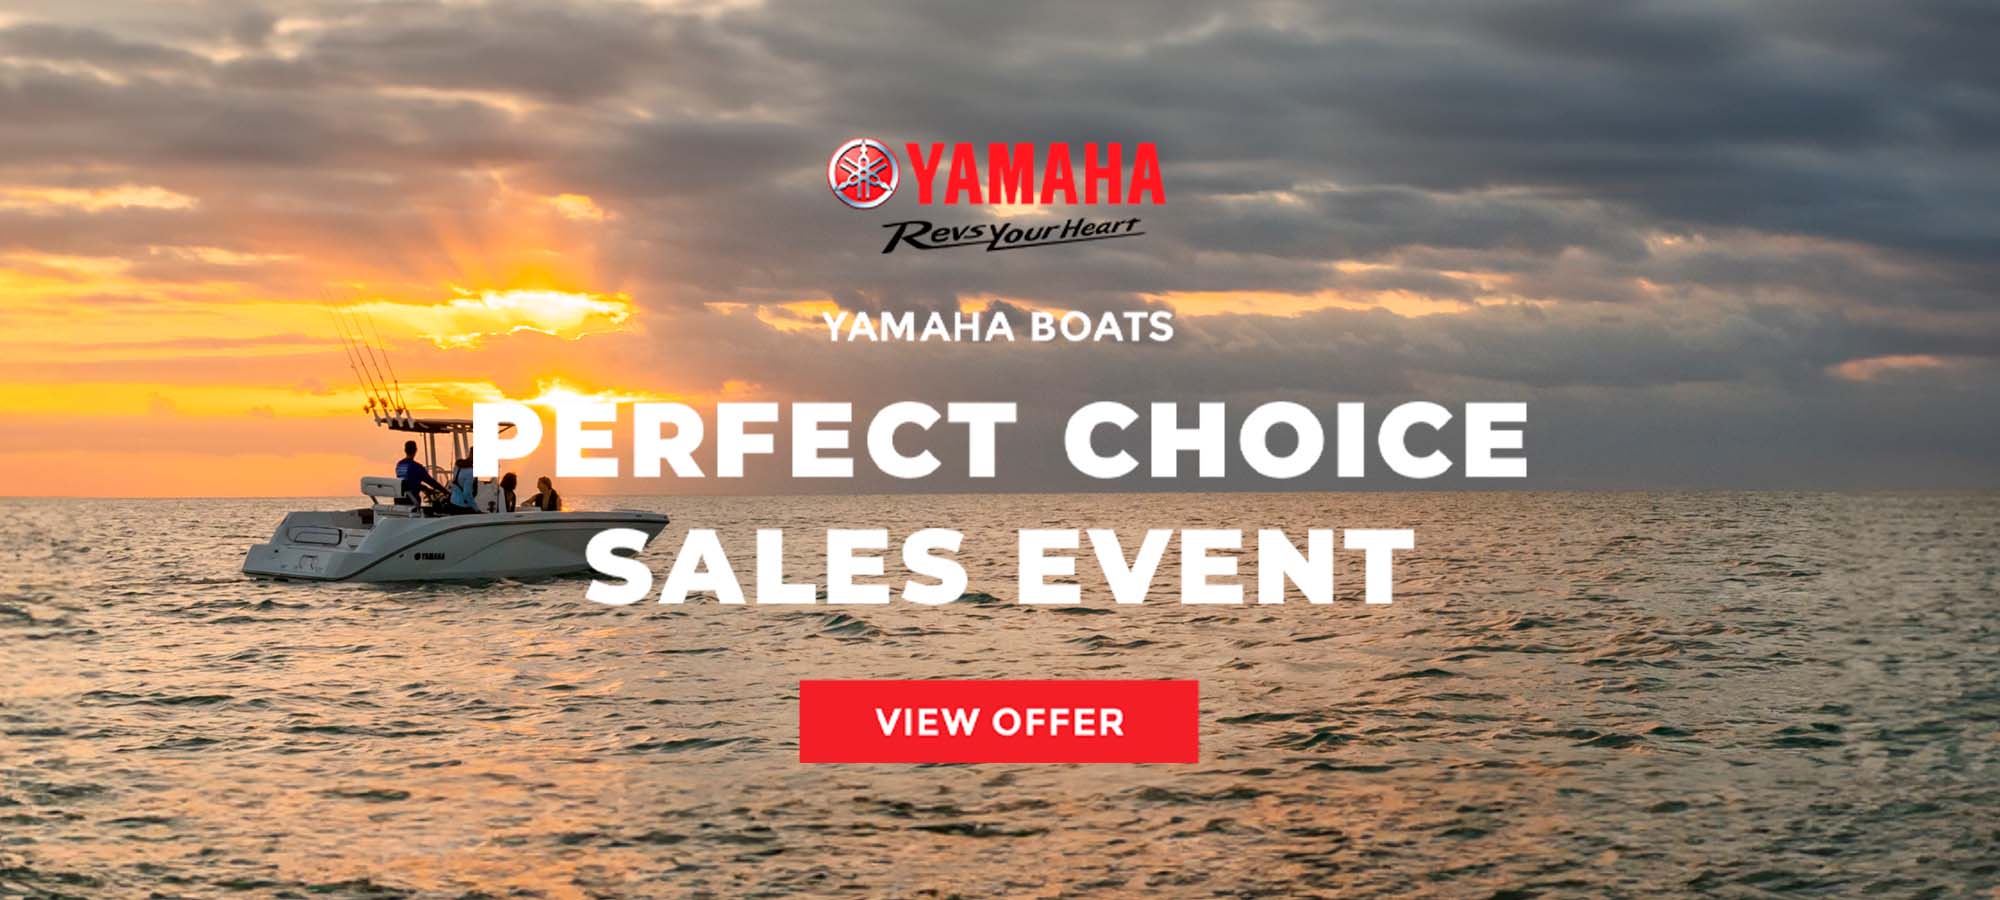 Yamaha US - Boats - PERFECT CHOICE SALES EVENT at ATVs and More